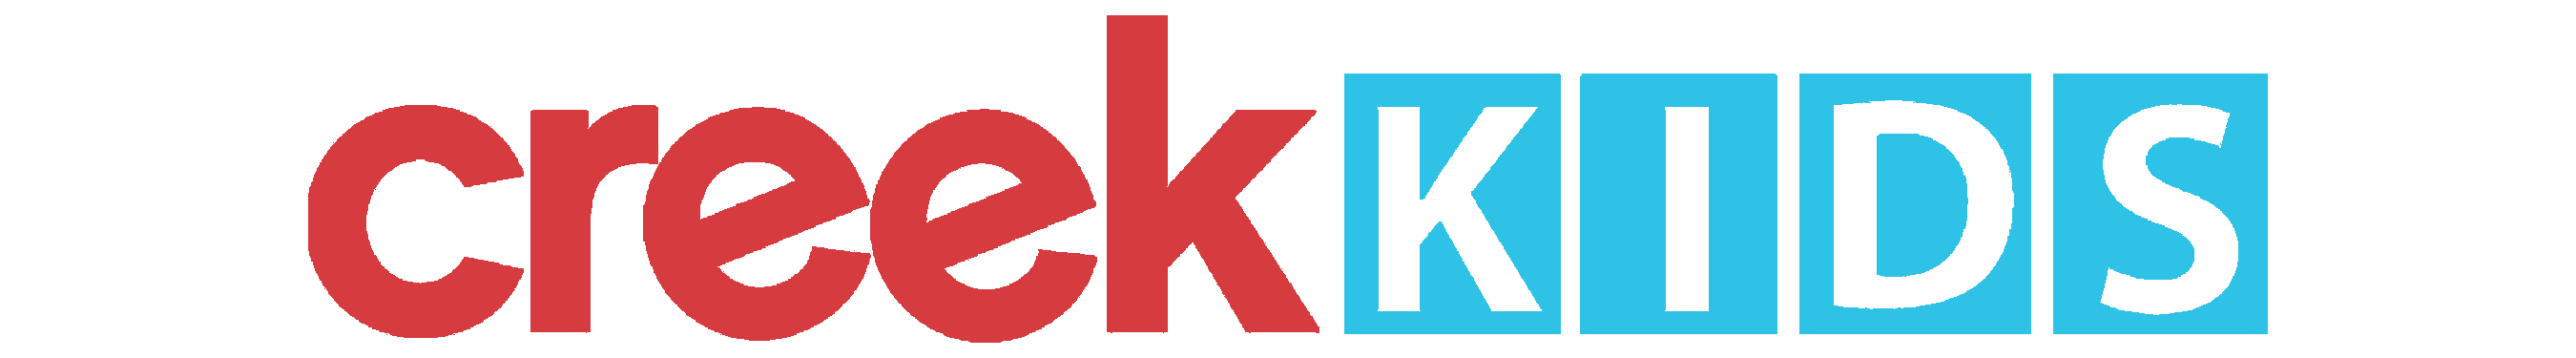 horizontal-ck-logo22.png